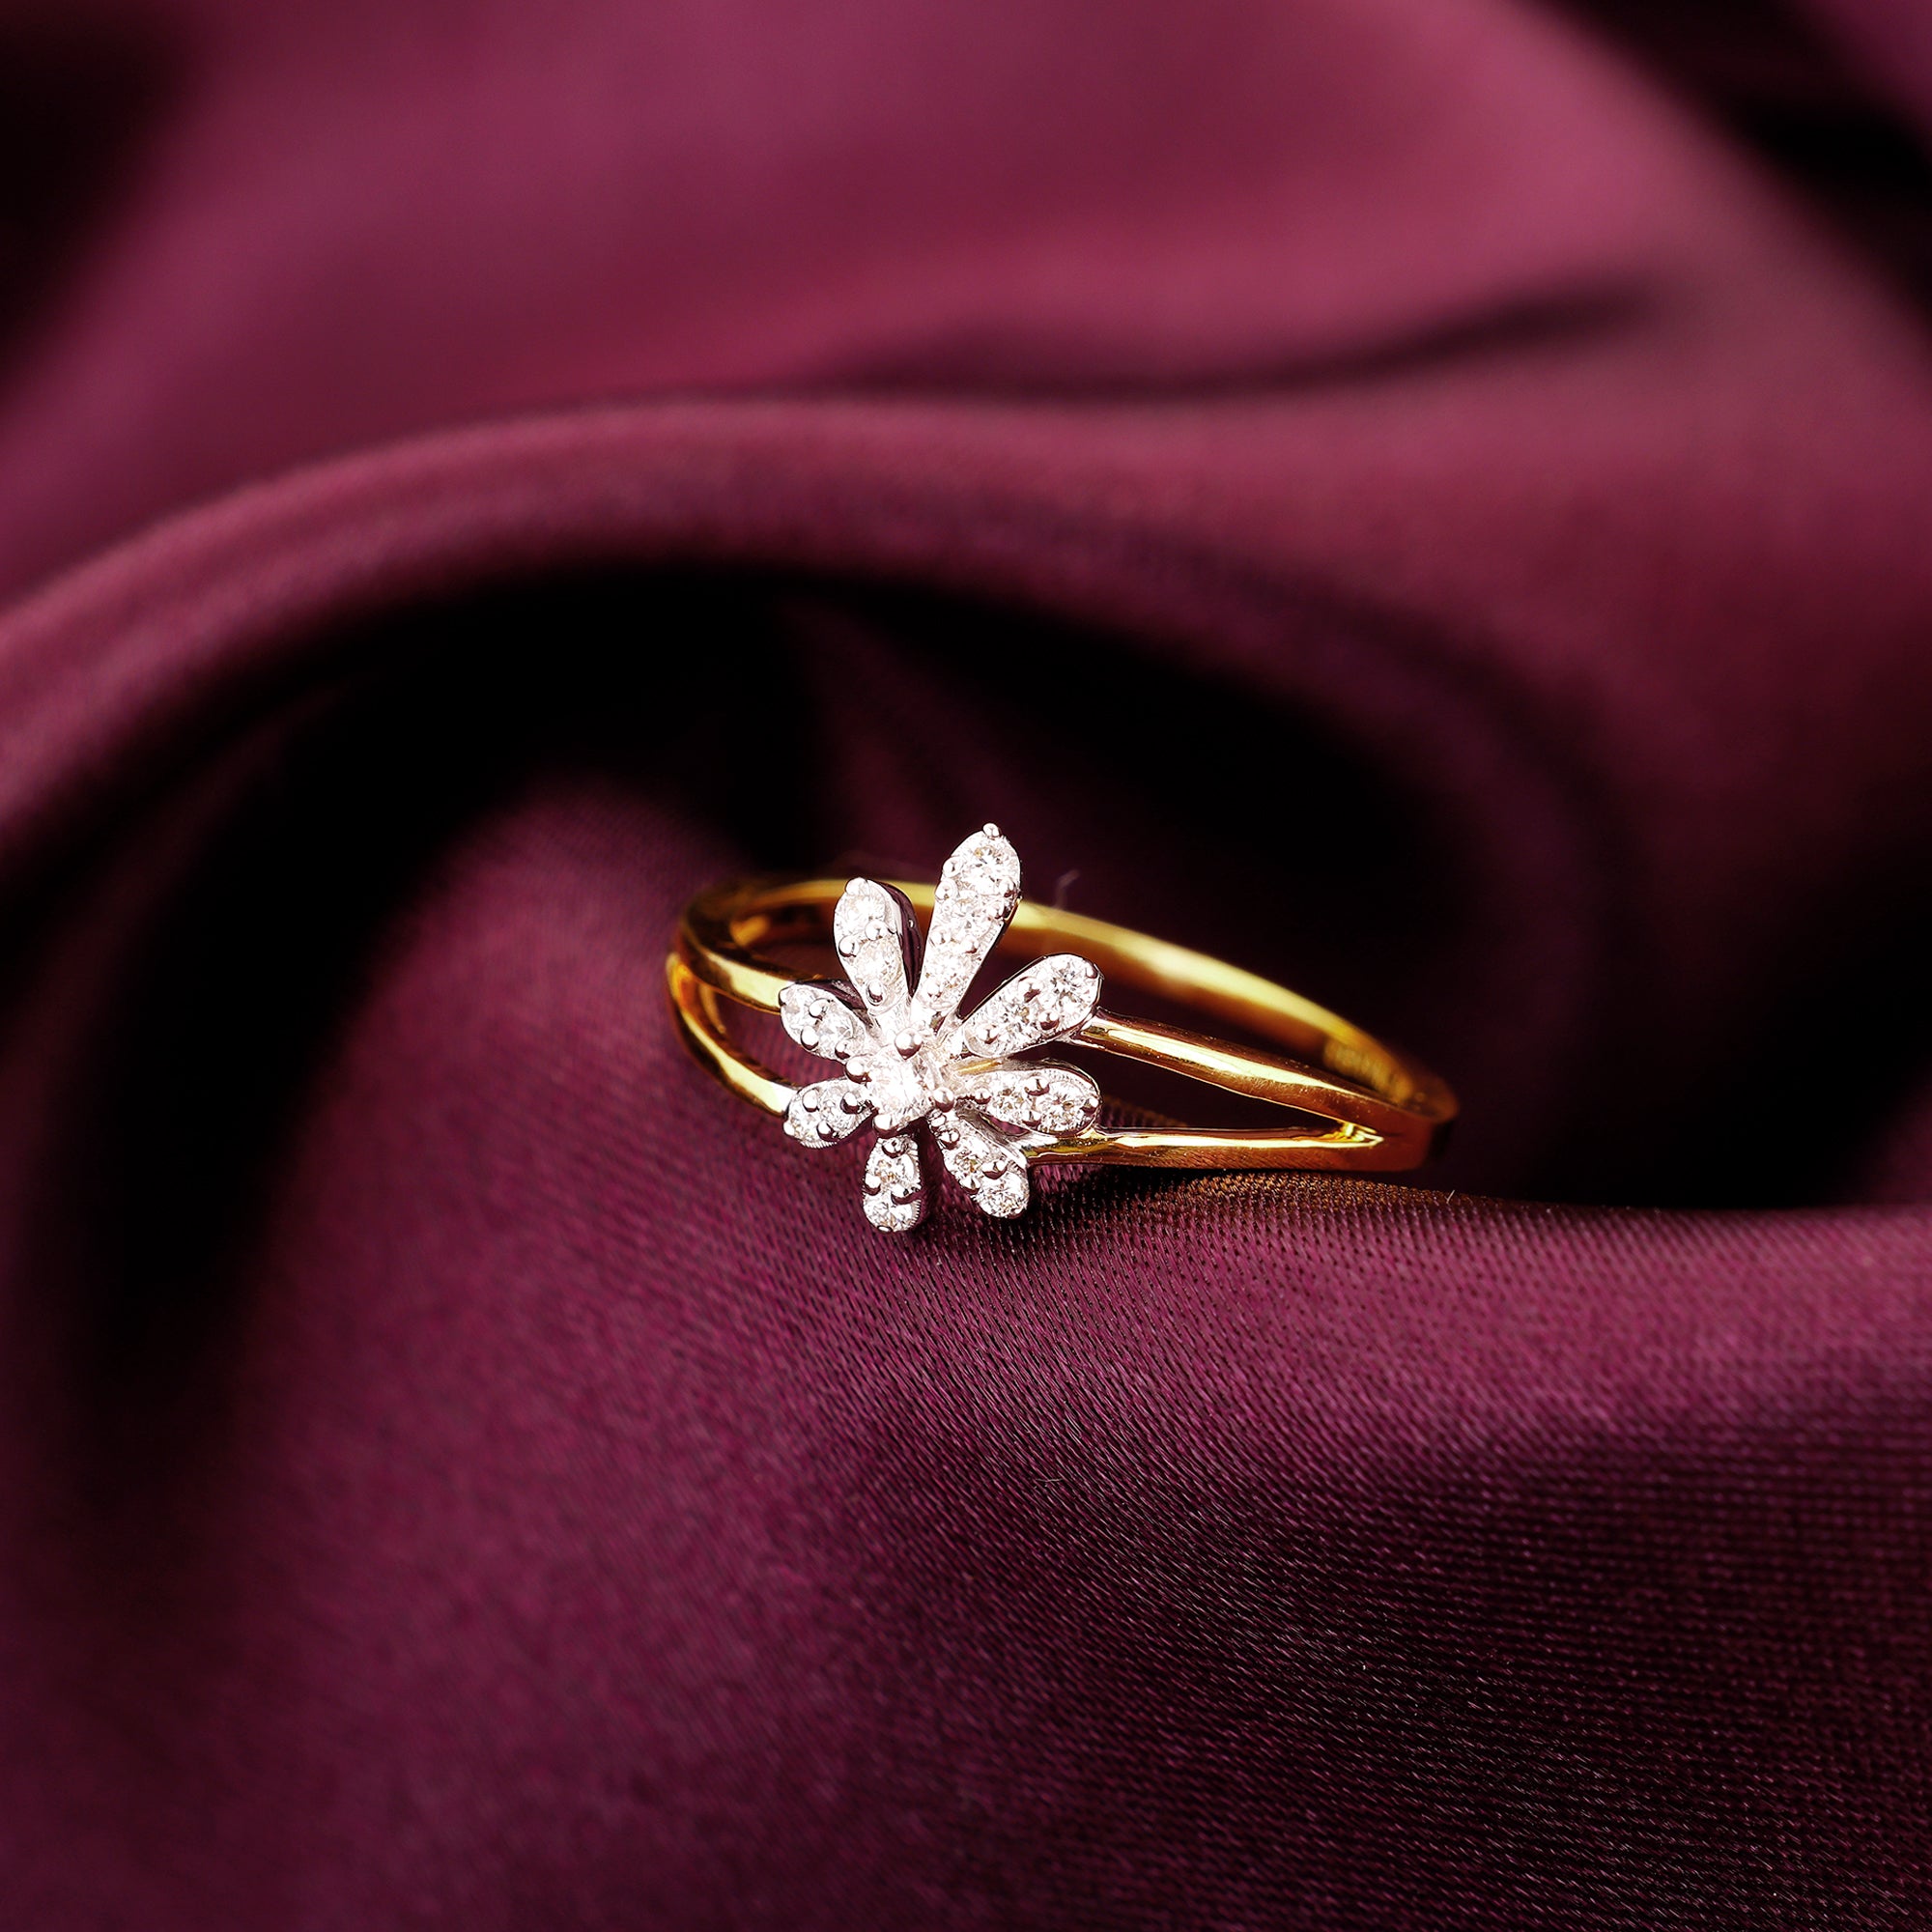 25 Wedding Ring Designs That Will Take Your Breath Away | Bridal Look |  Wedding Blog